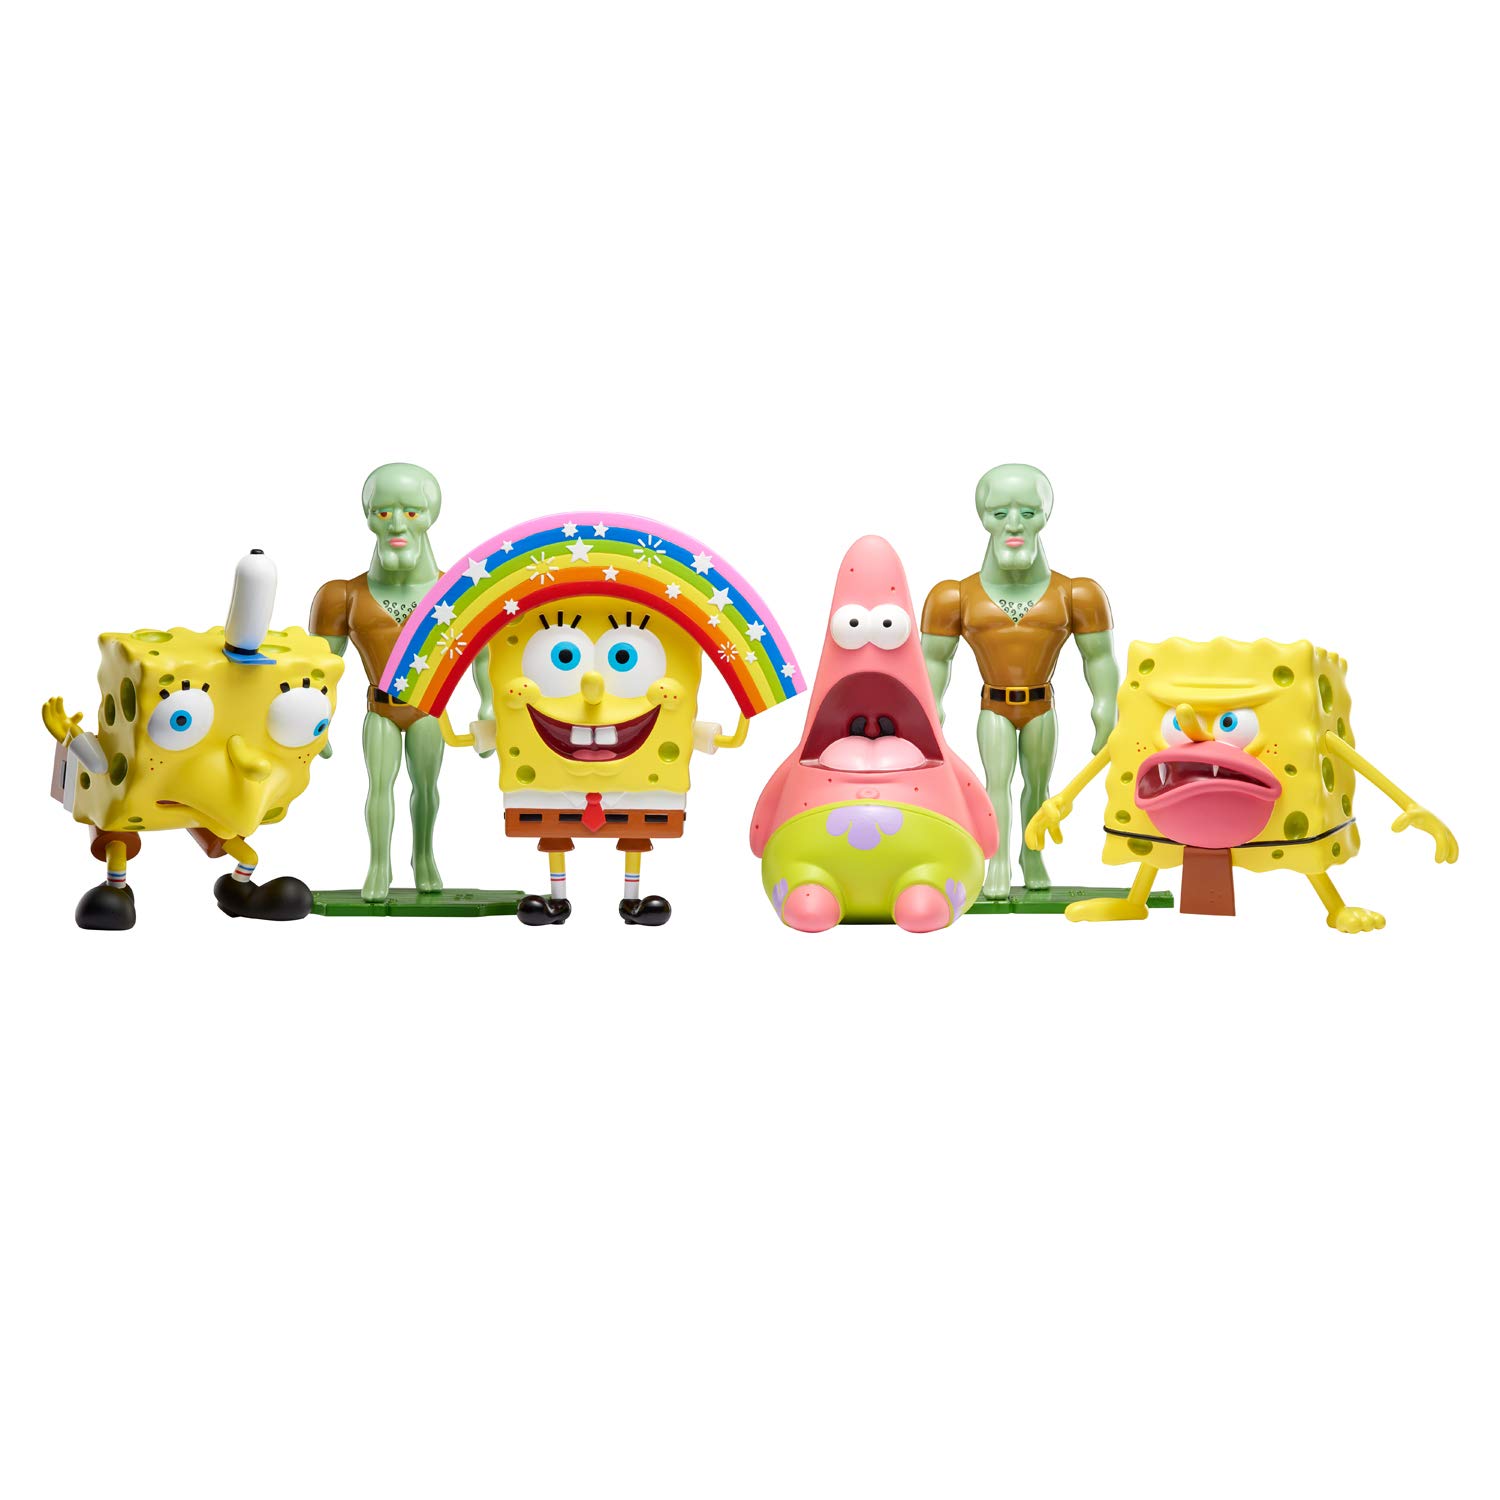 Nickelodeon vende bonecos de memes do Bob Esponja - GKPB - Geek Publicitário